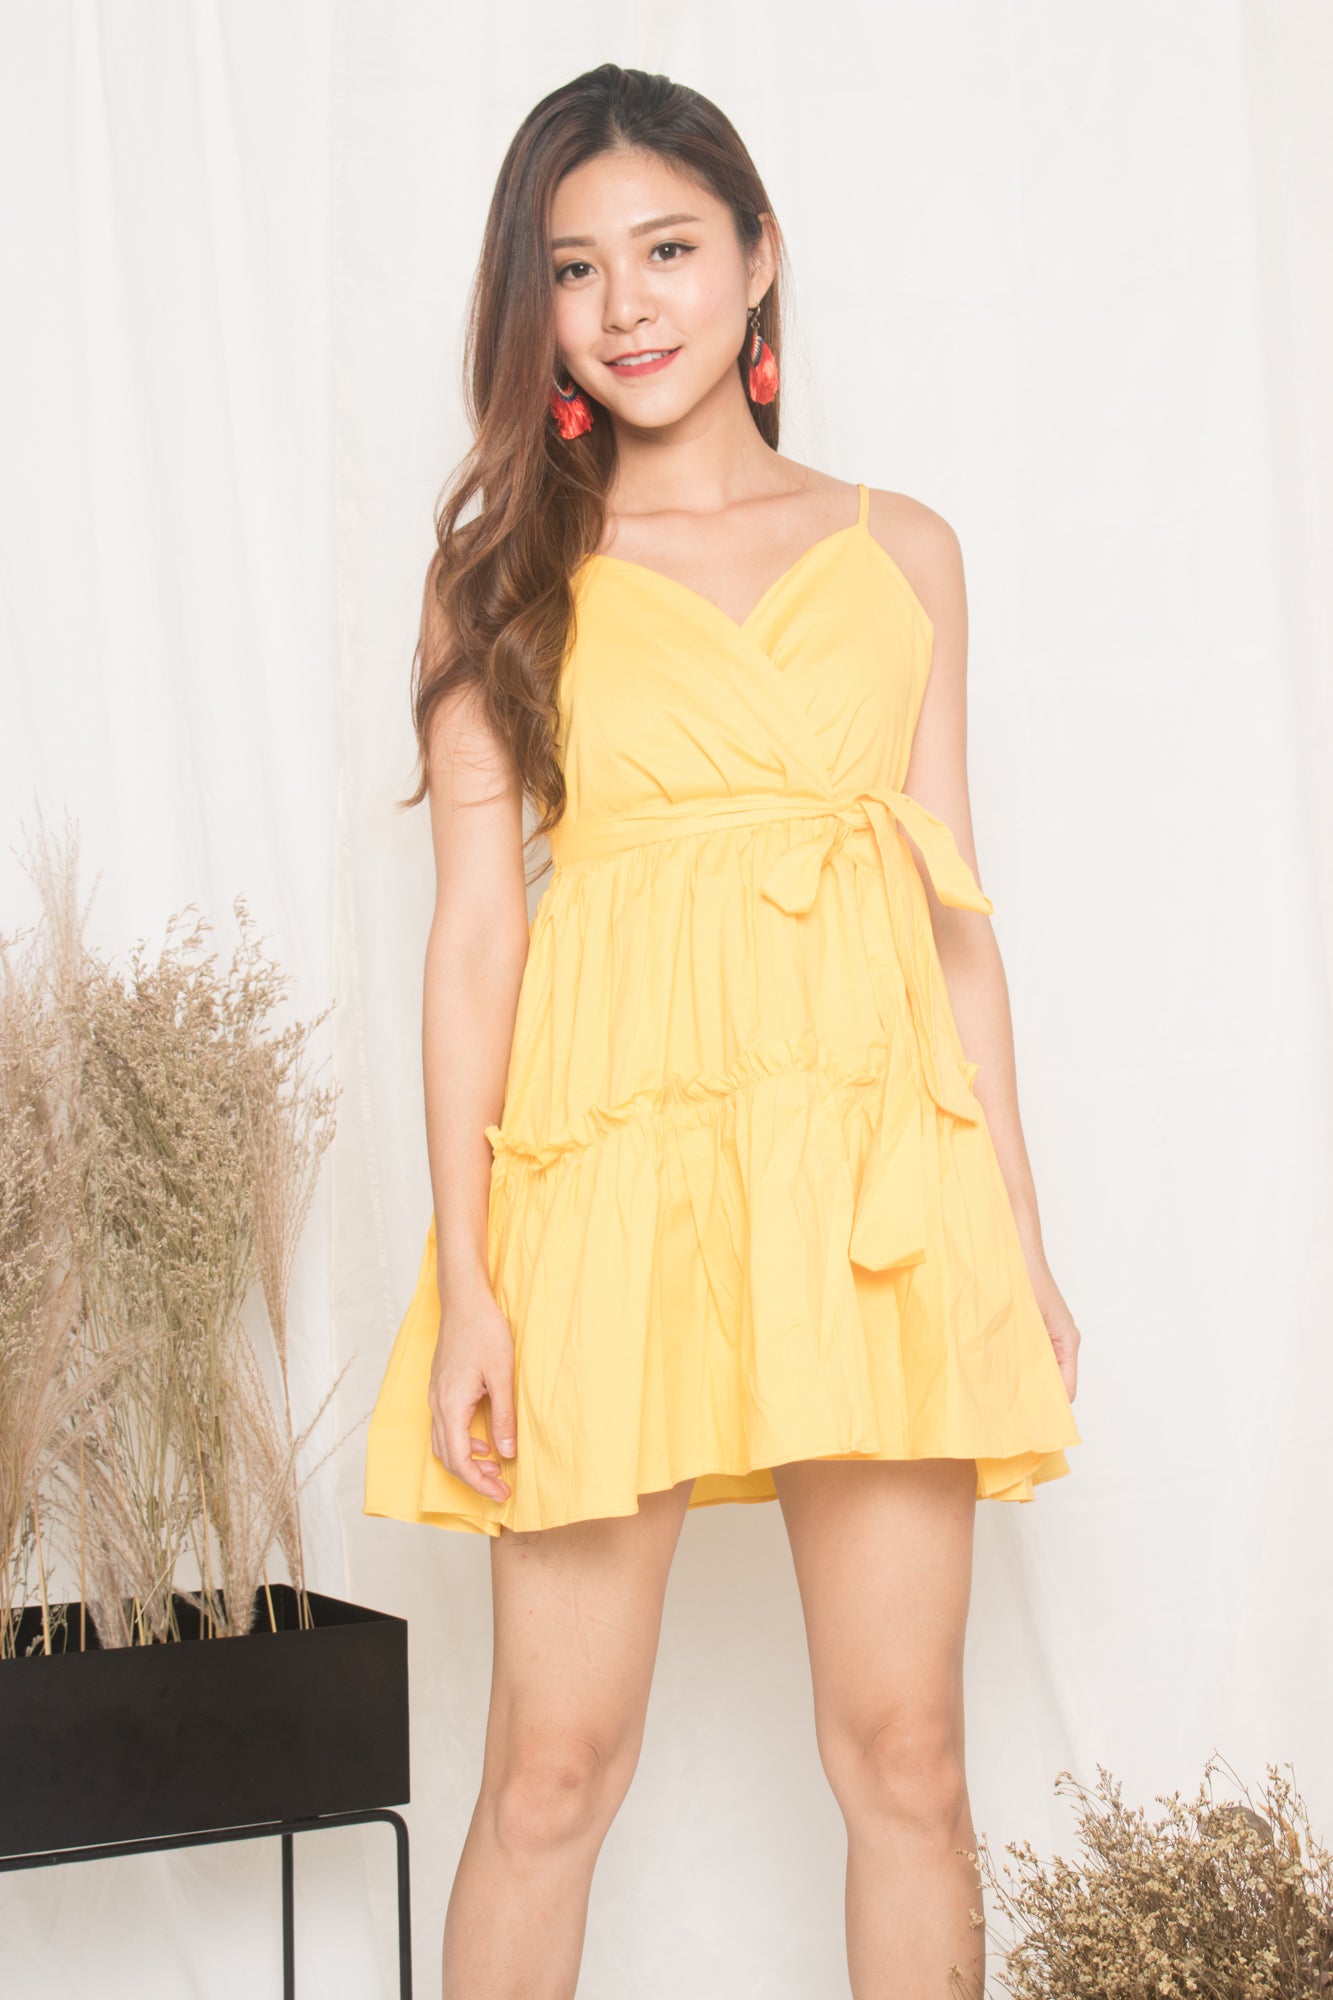 Oksar Layer Dress in Yellow